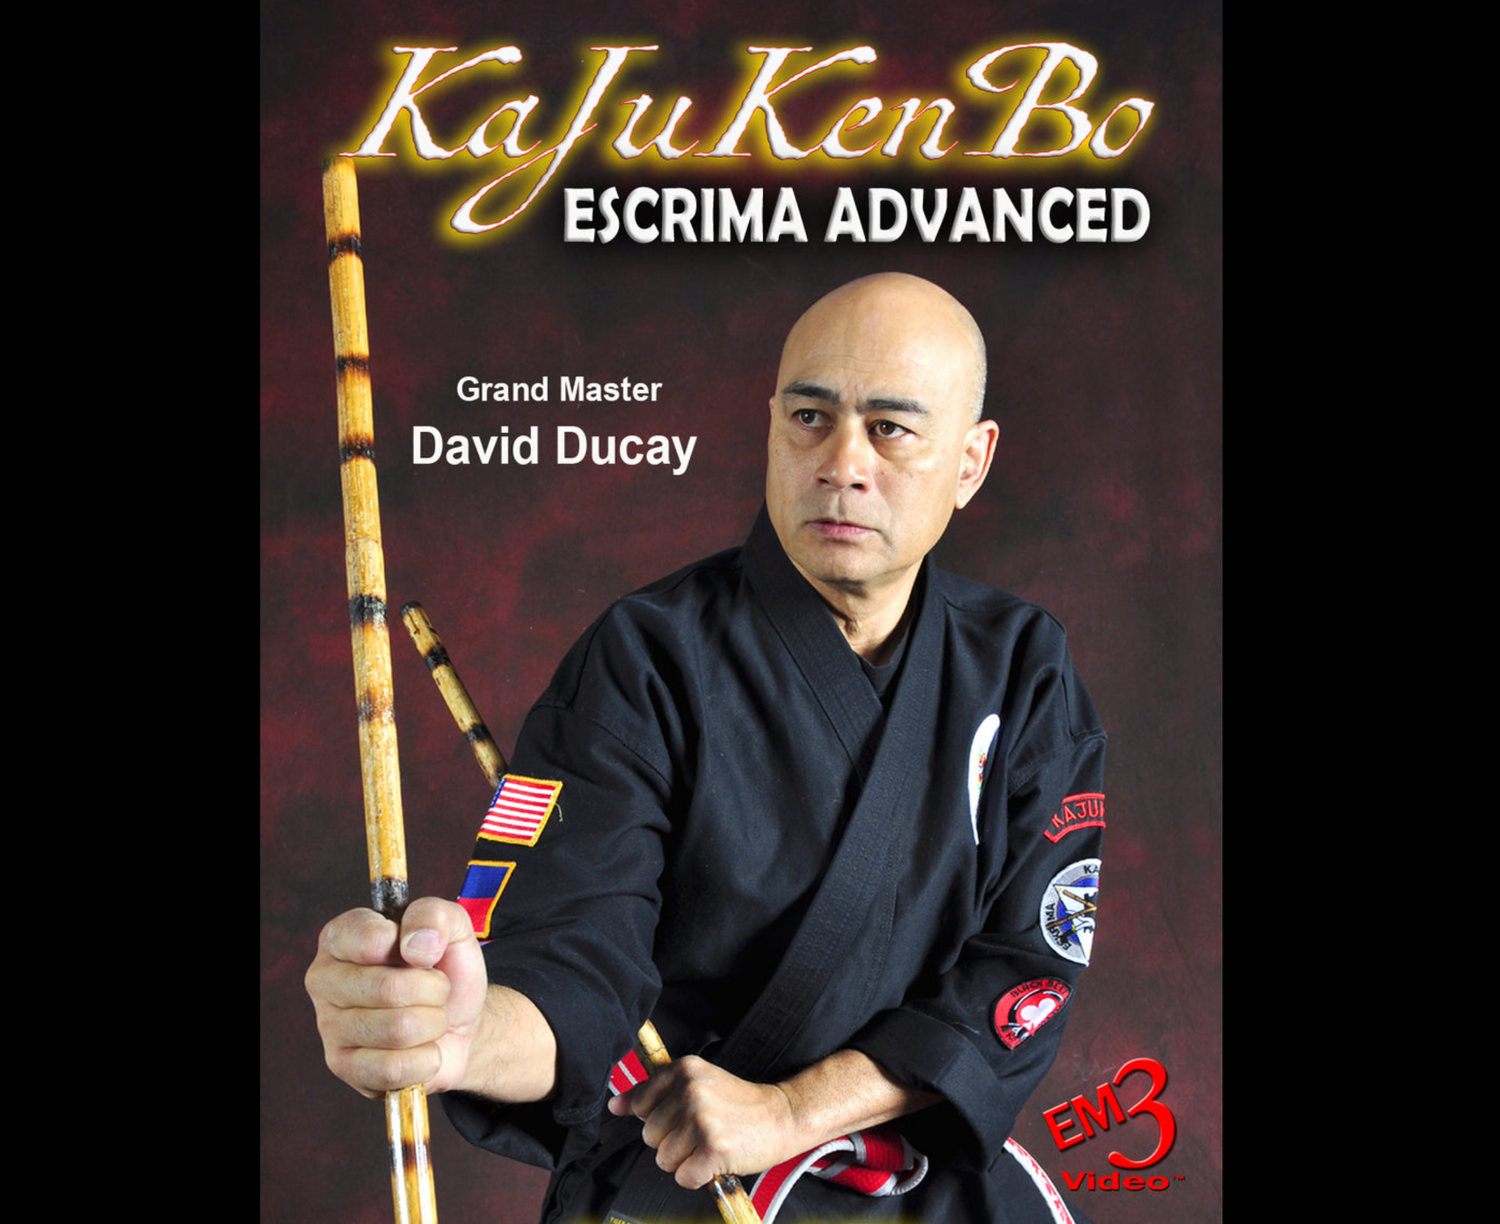 KaJuKenBo Escrima Advanced de David Ducay (Bajo demanda)